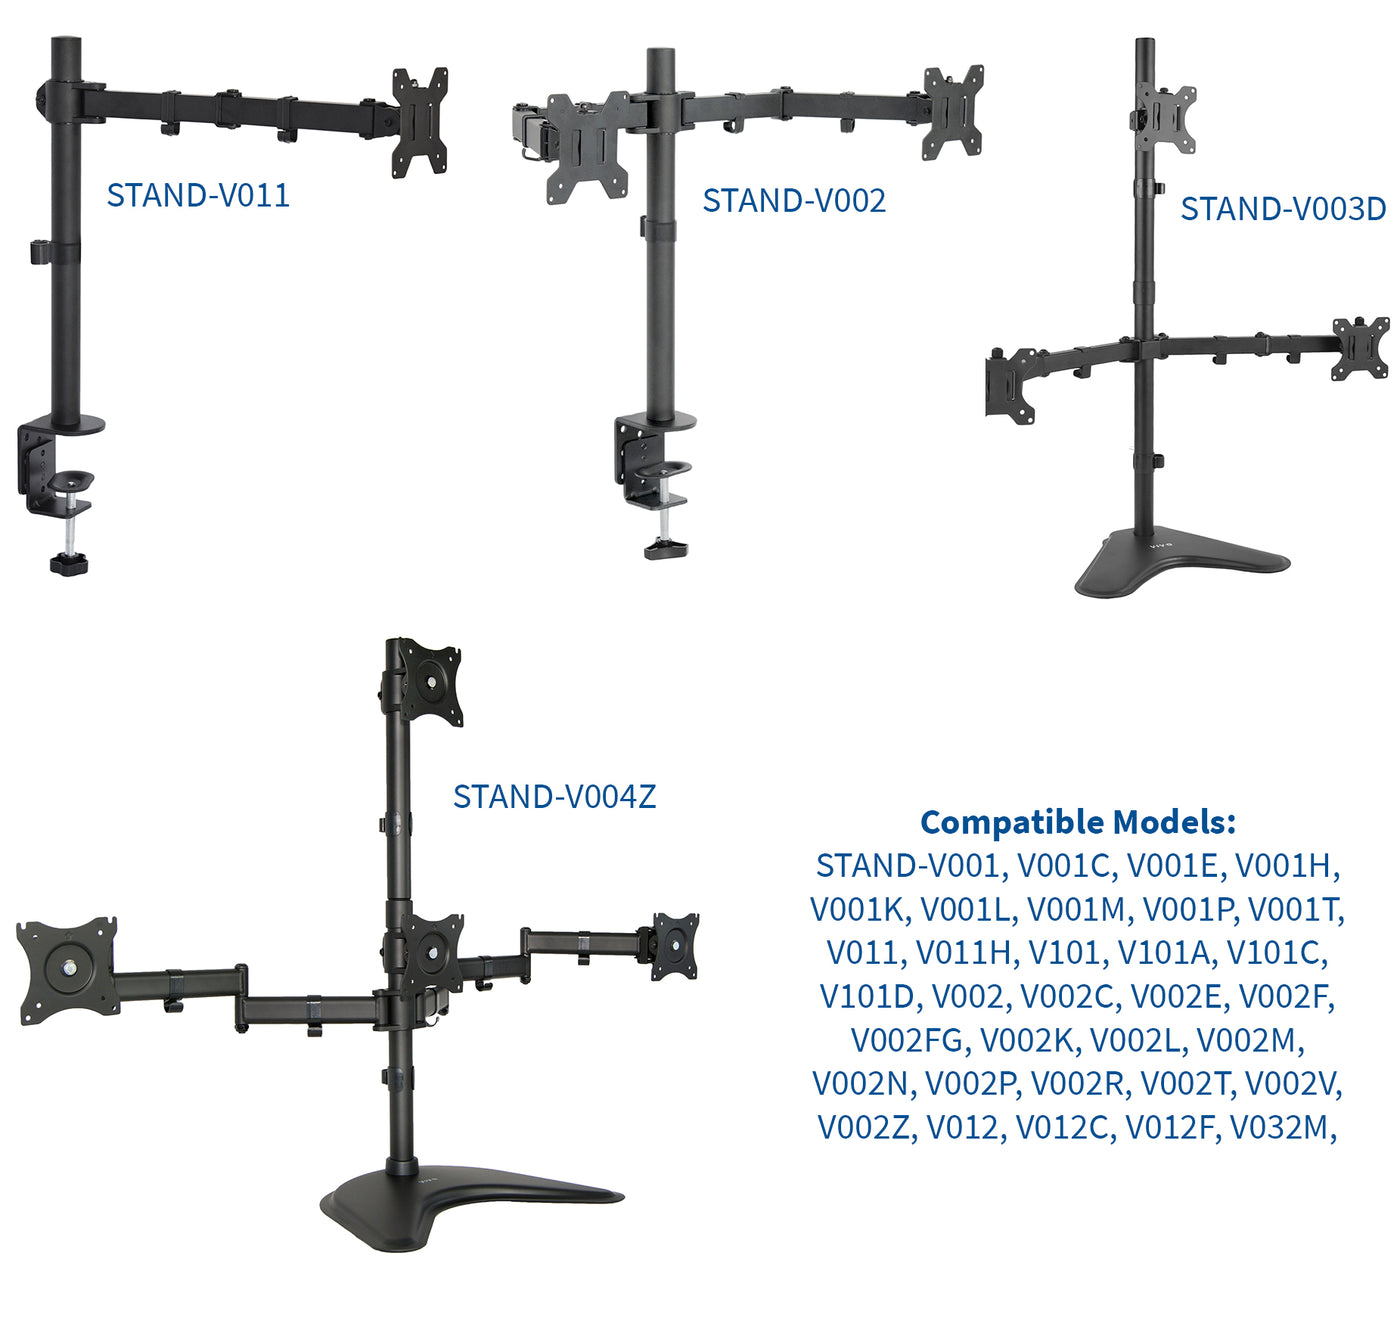 Dual monitor arm mount for desk pole with versatile setup options.